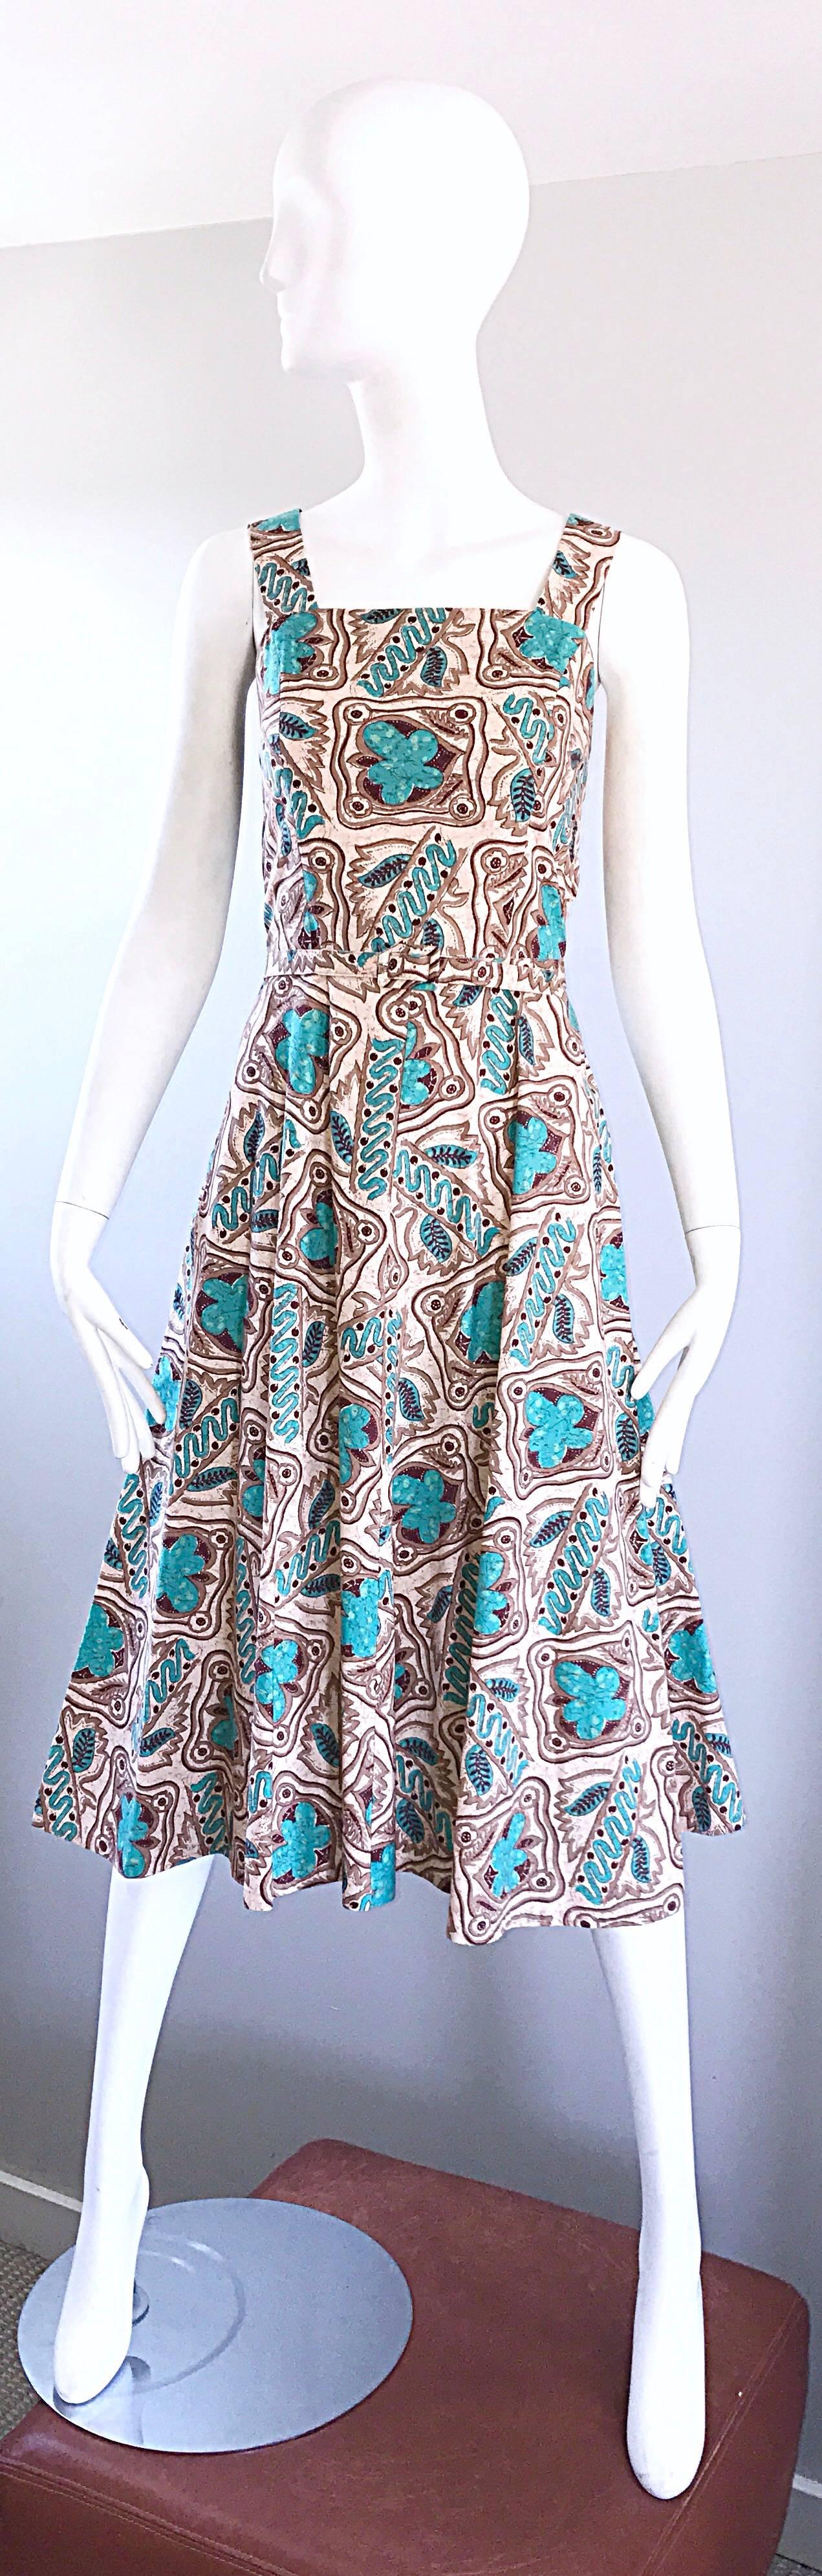 Wonderful 1950s Batik Print Teal & Brown Fit and Flare Belted Vintage 50s Dress 5